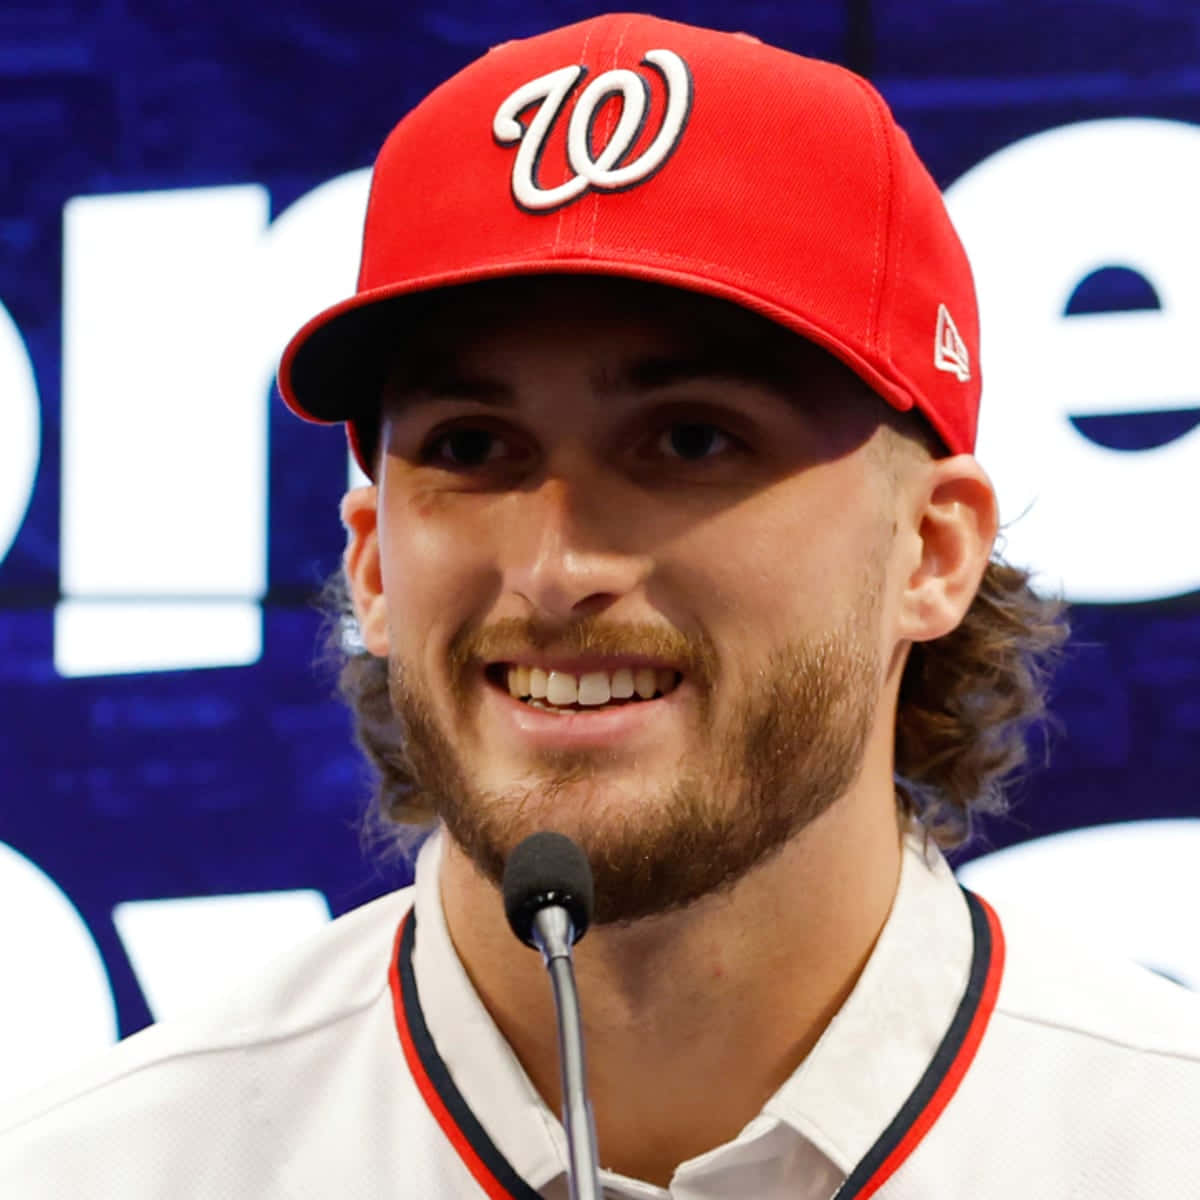 Baseball Cap Smiling Man Press Conference Wallpaper